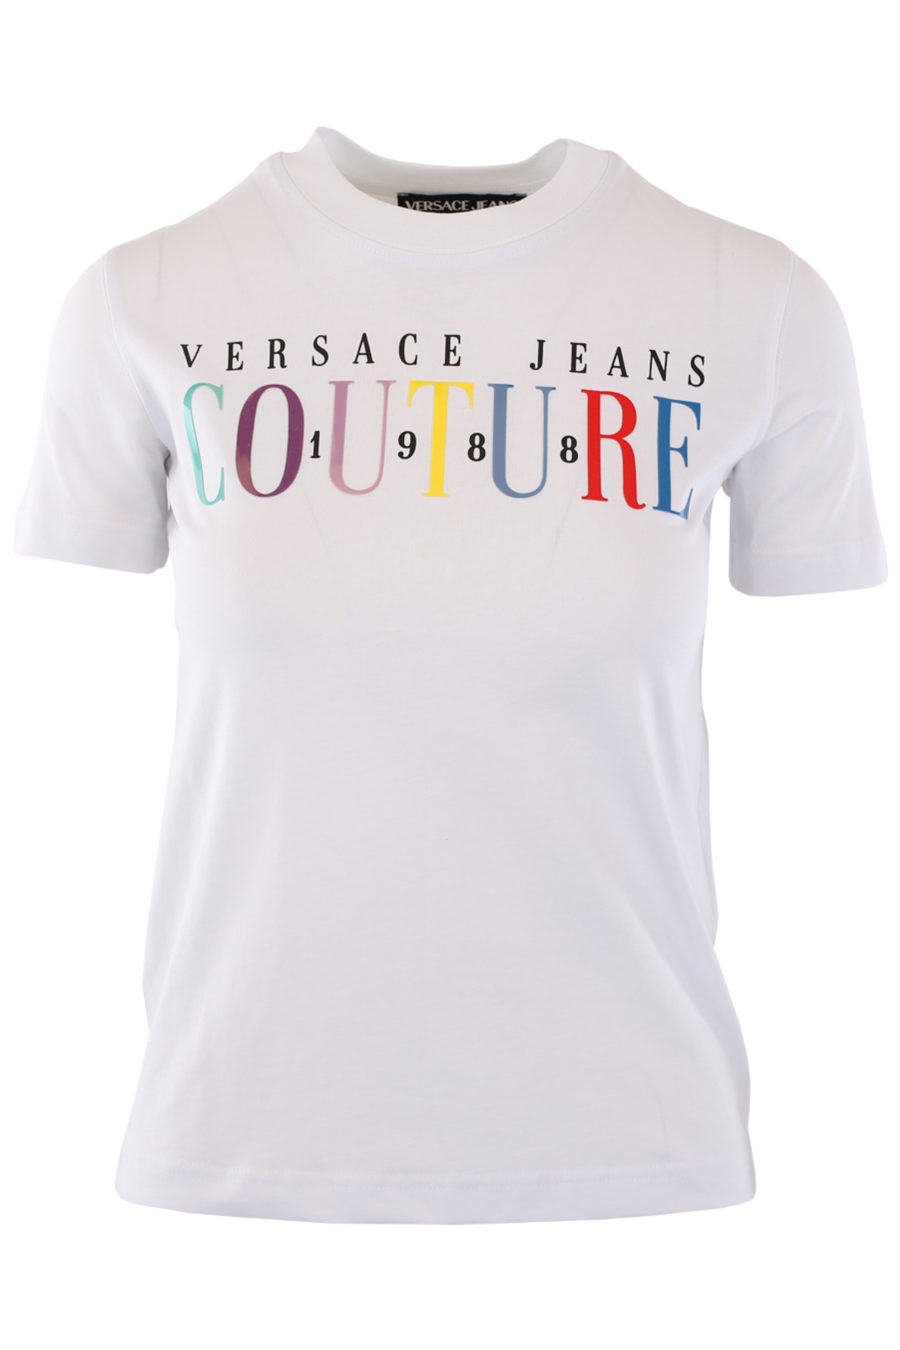 Camiseta blanca con logo multicolor centro - IMG 0793